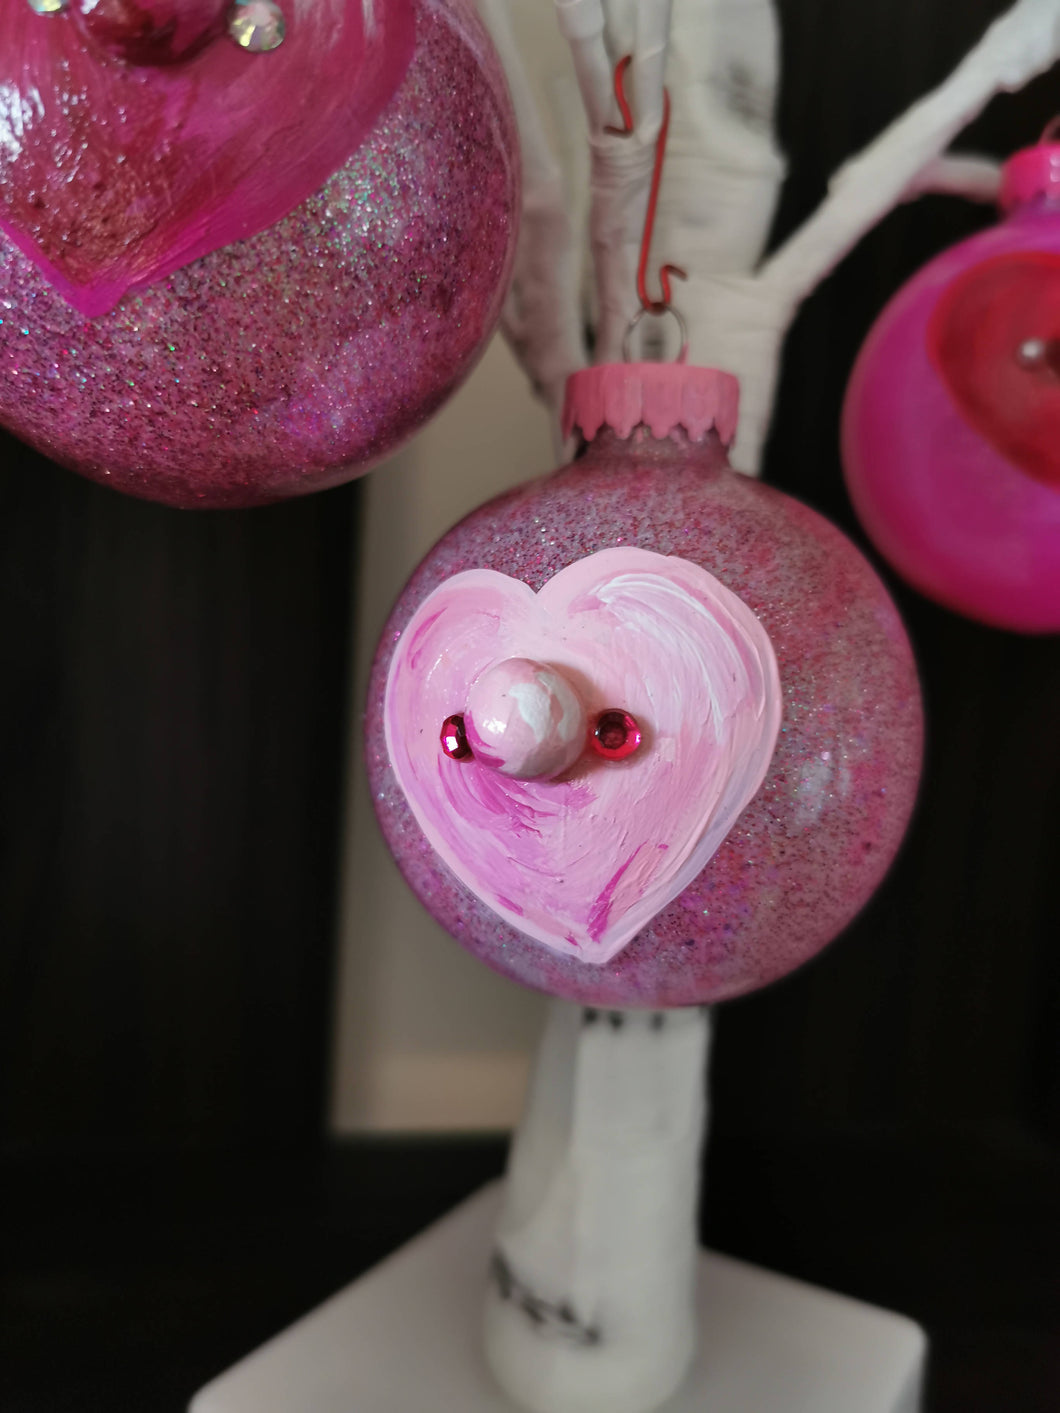 Whimsical Novelty Valentine's Boob Ornament